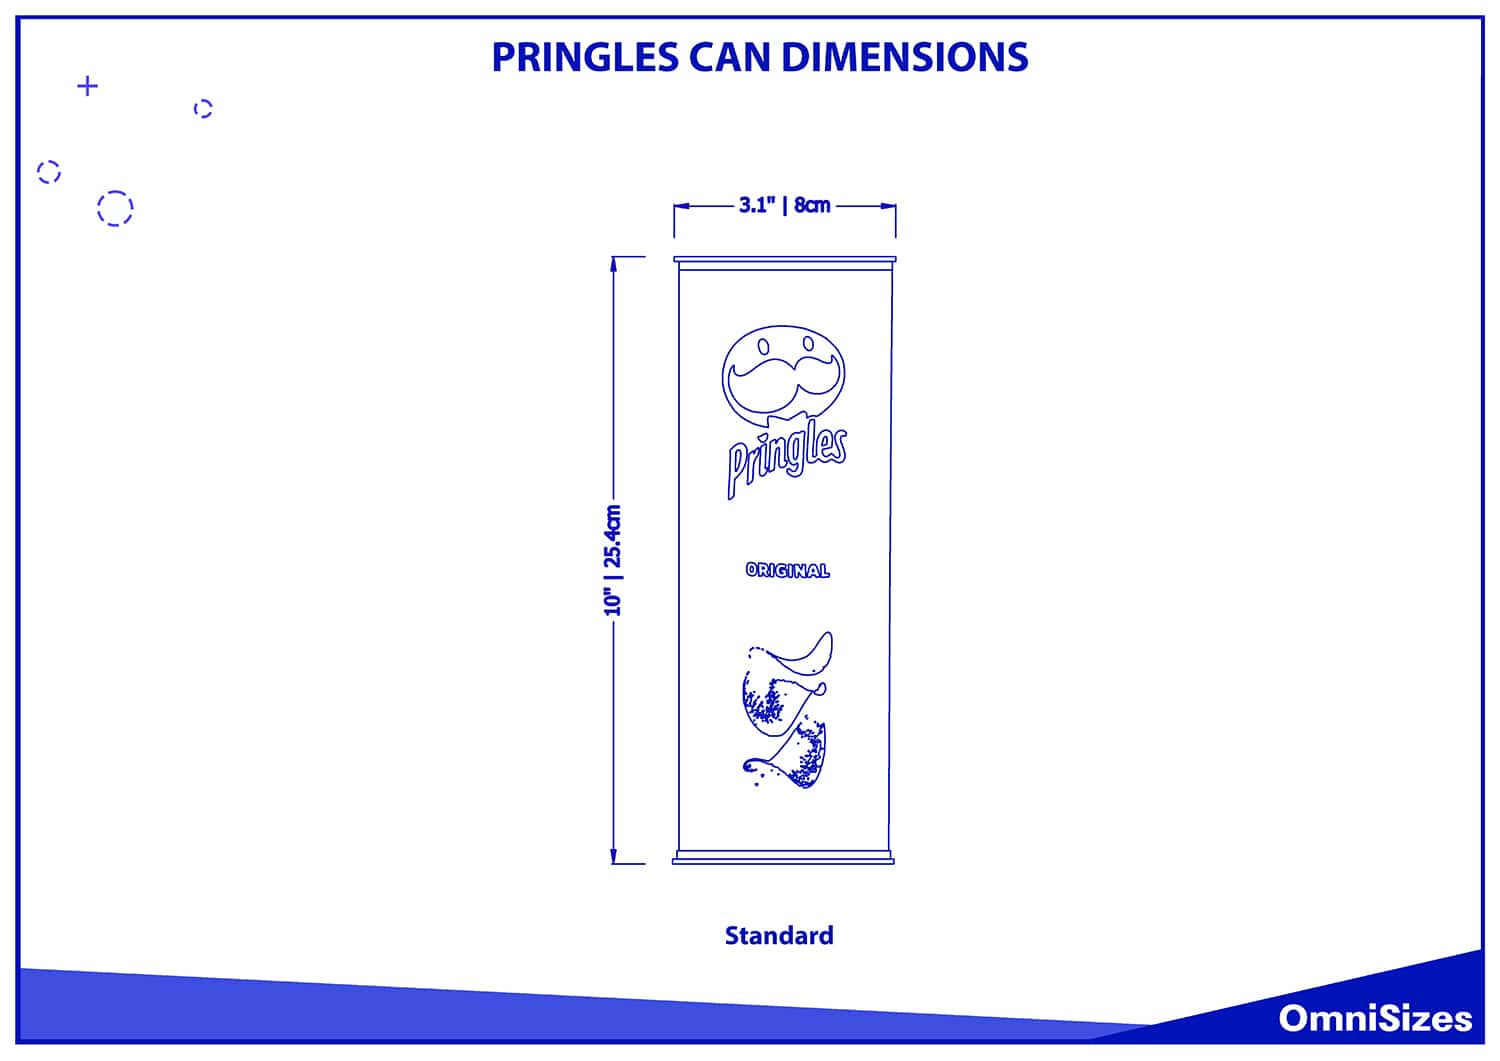 Pringles can dimensions